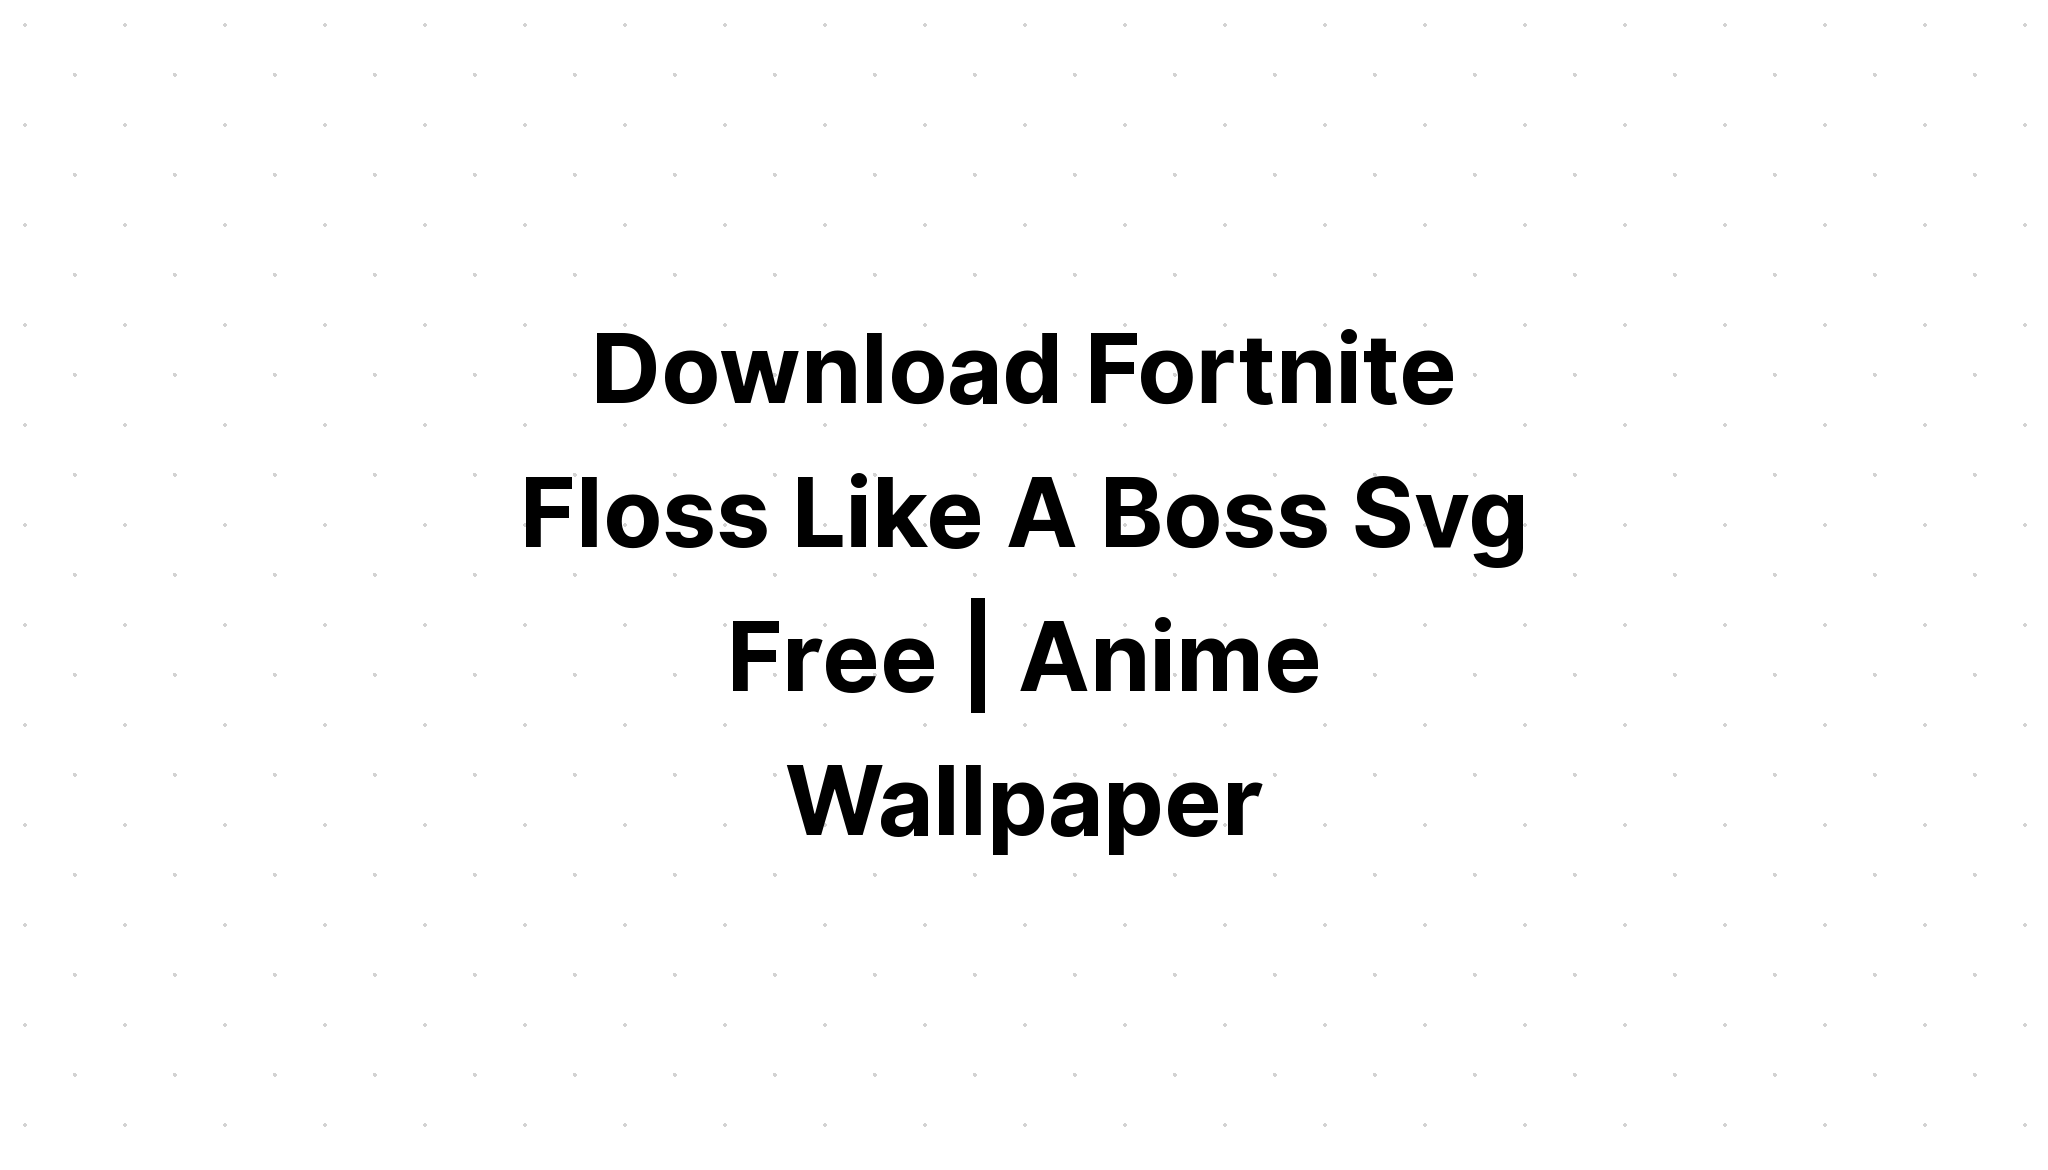 Download Floss Like Boss Valentine Svg - Layered SVG Cut File